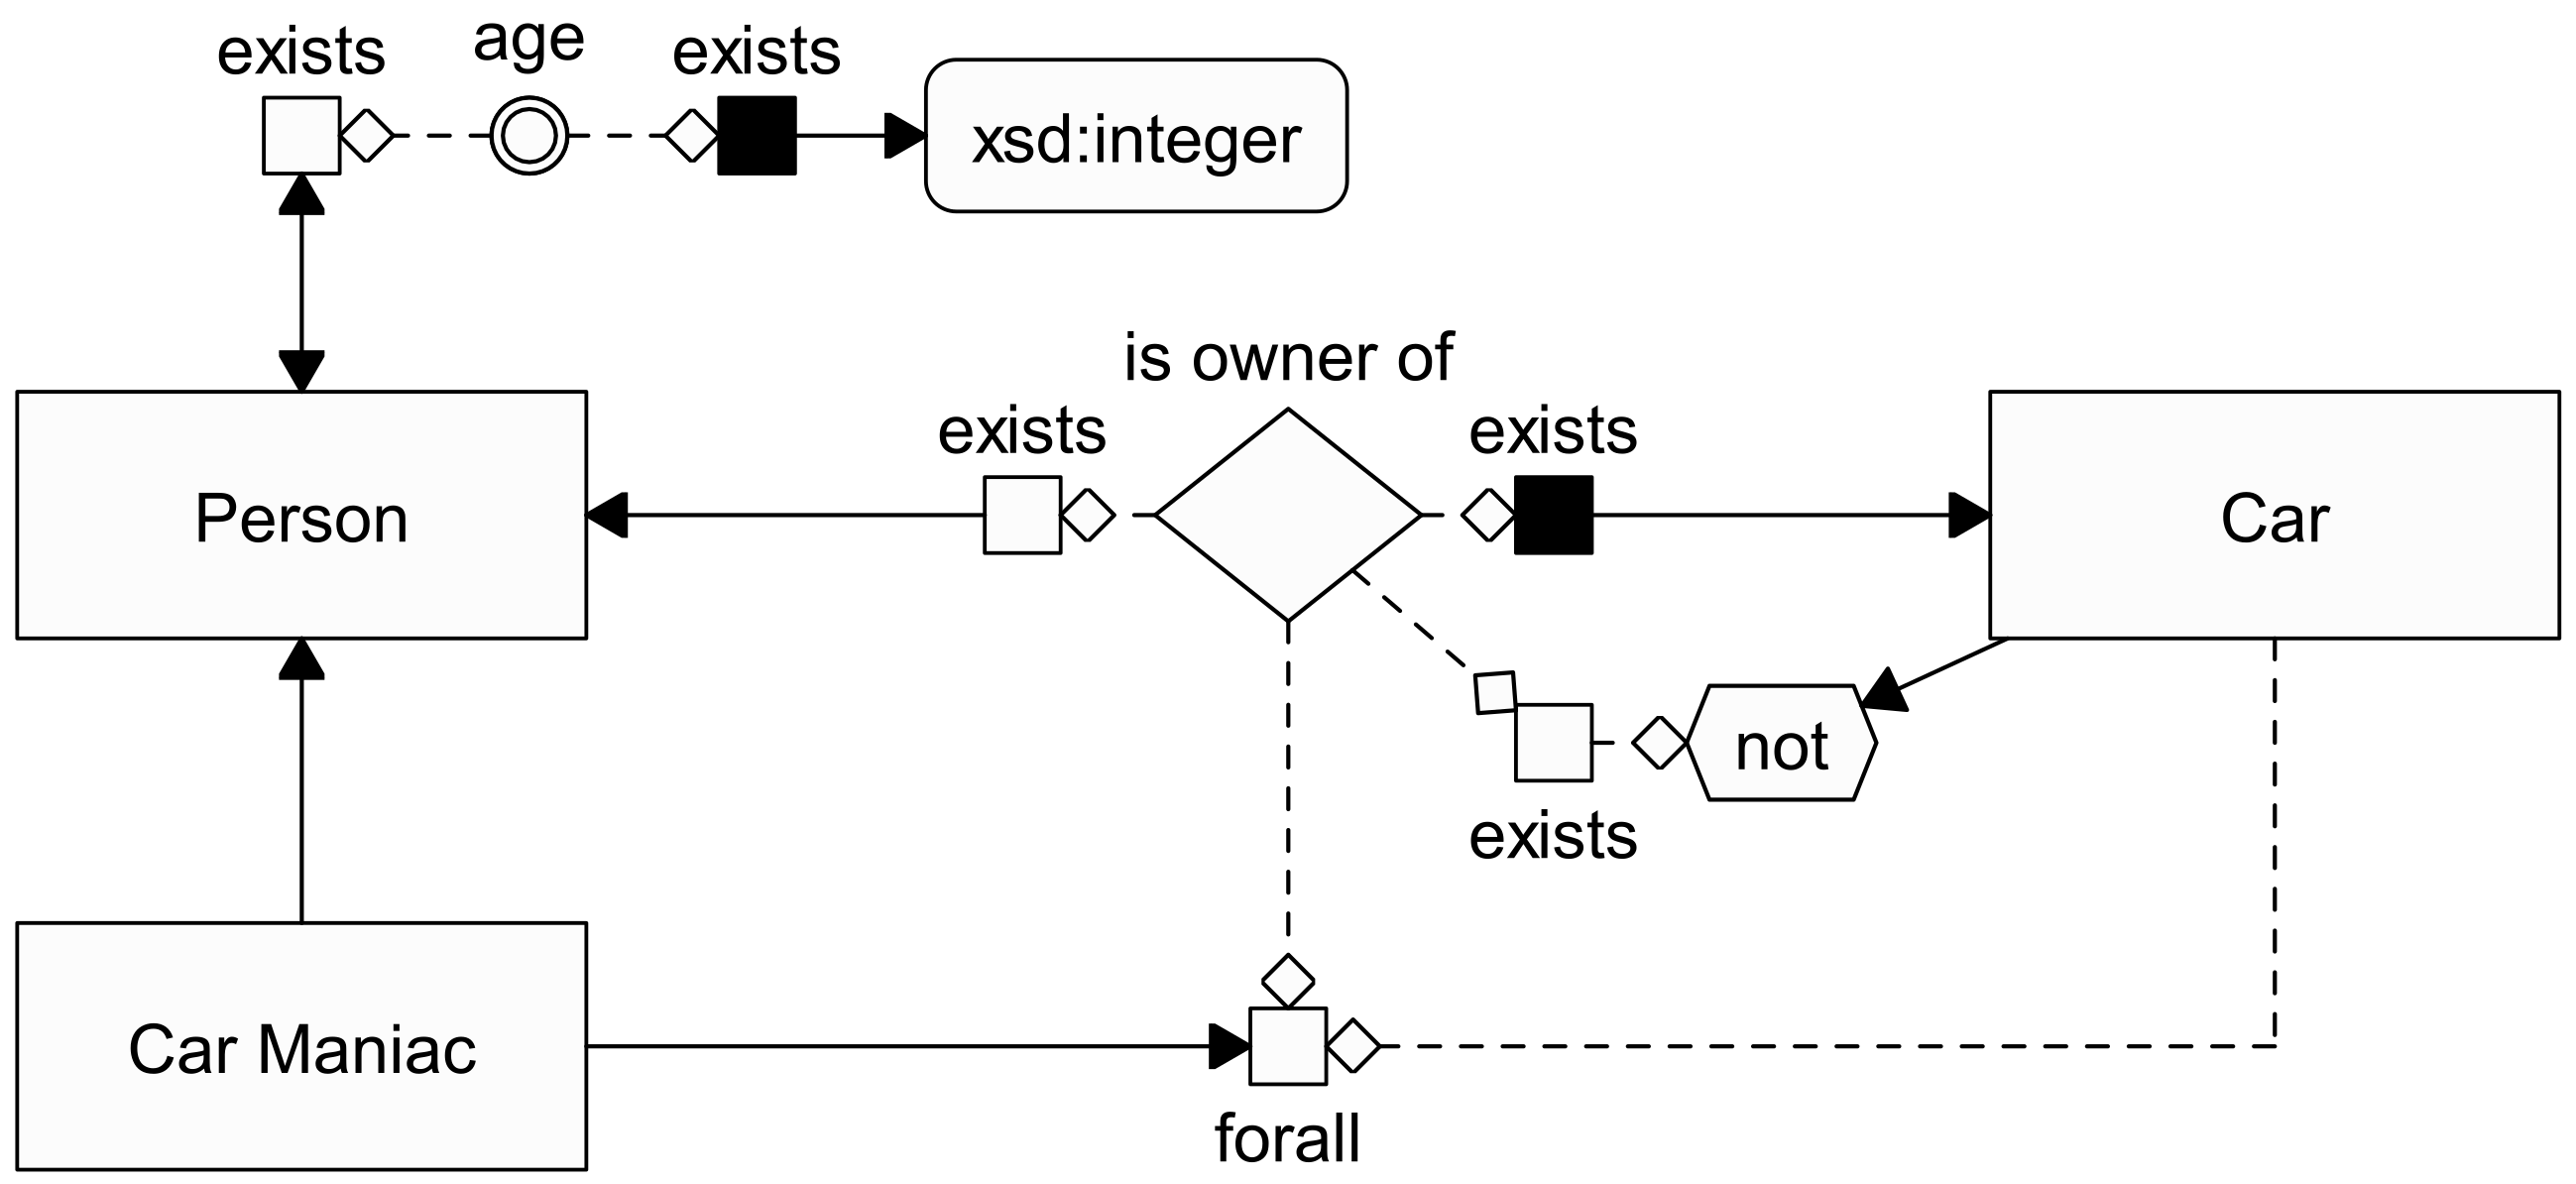 ontology modeling